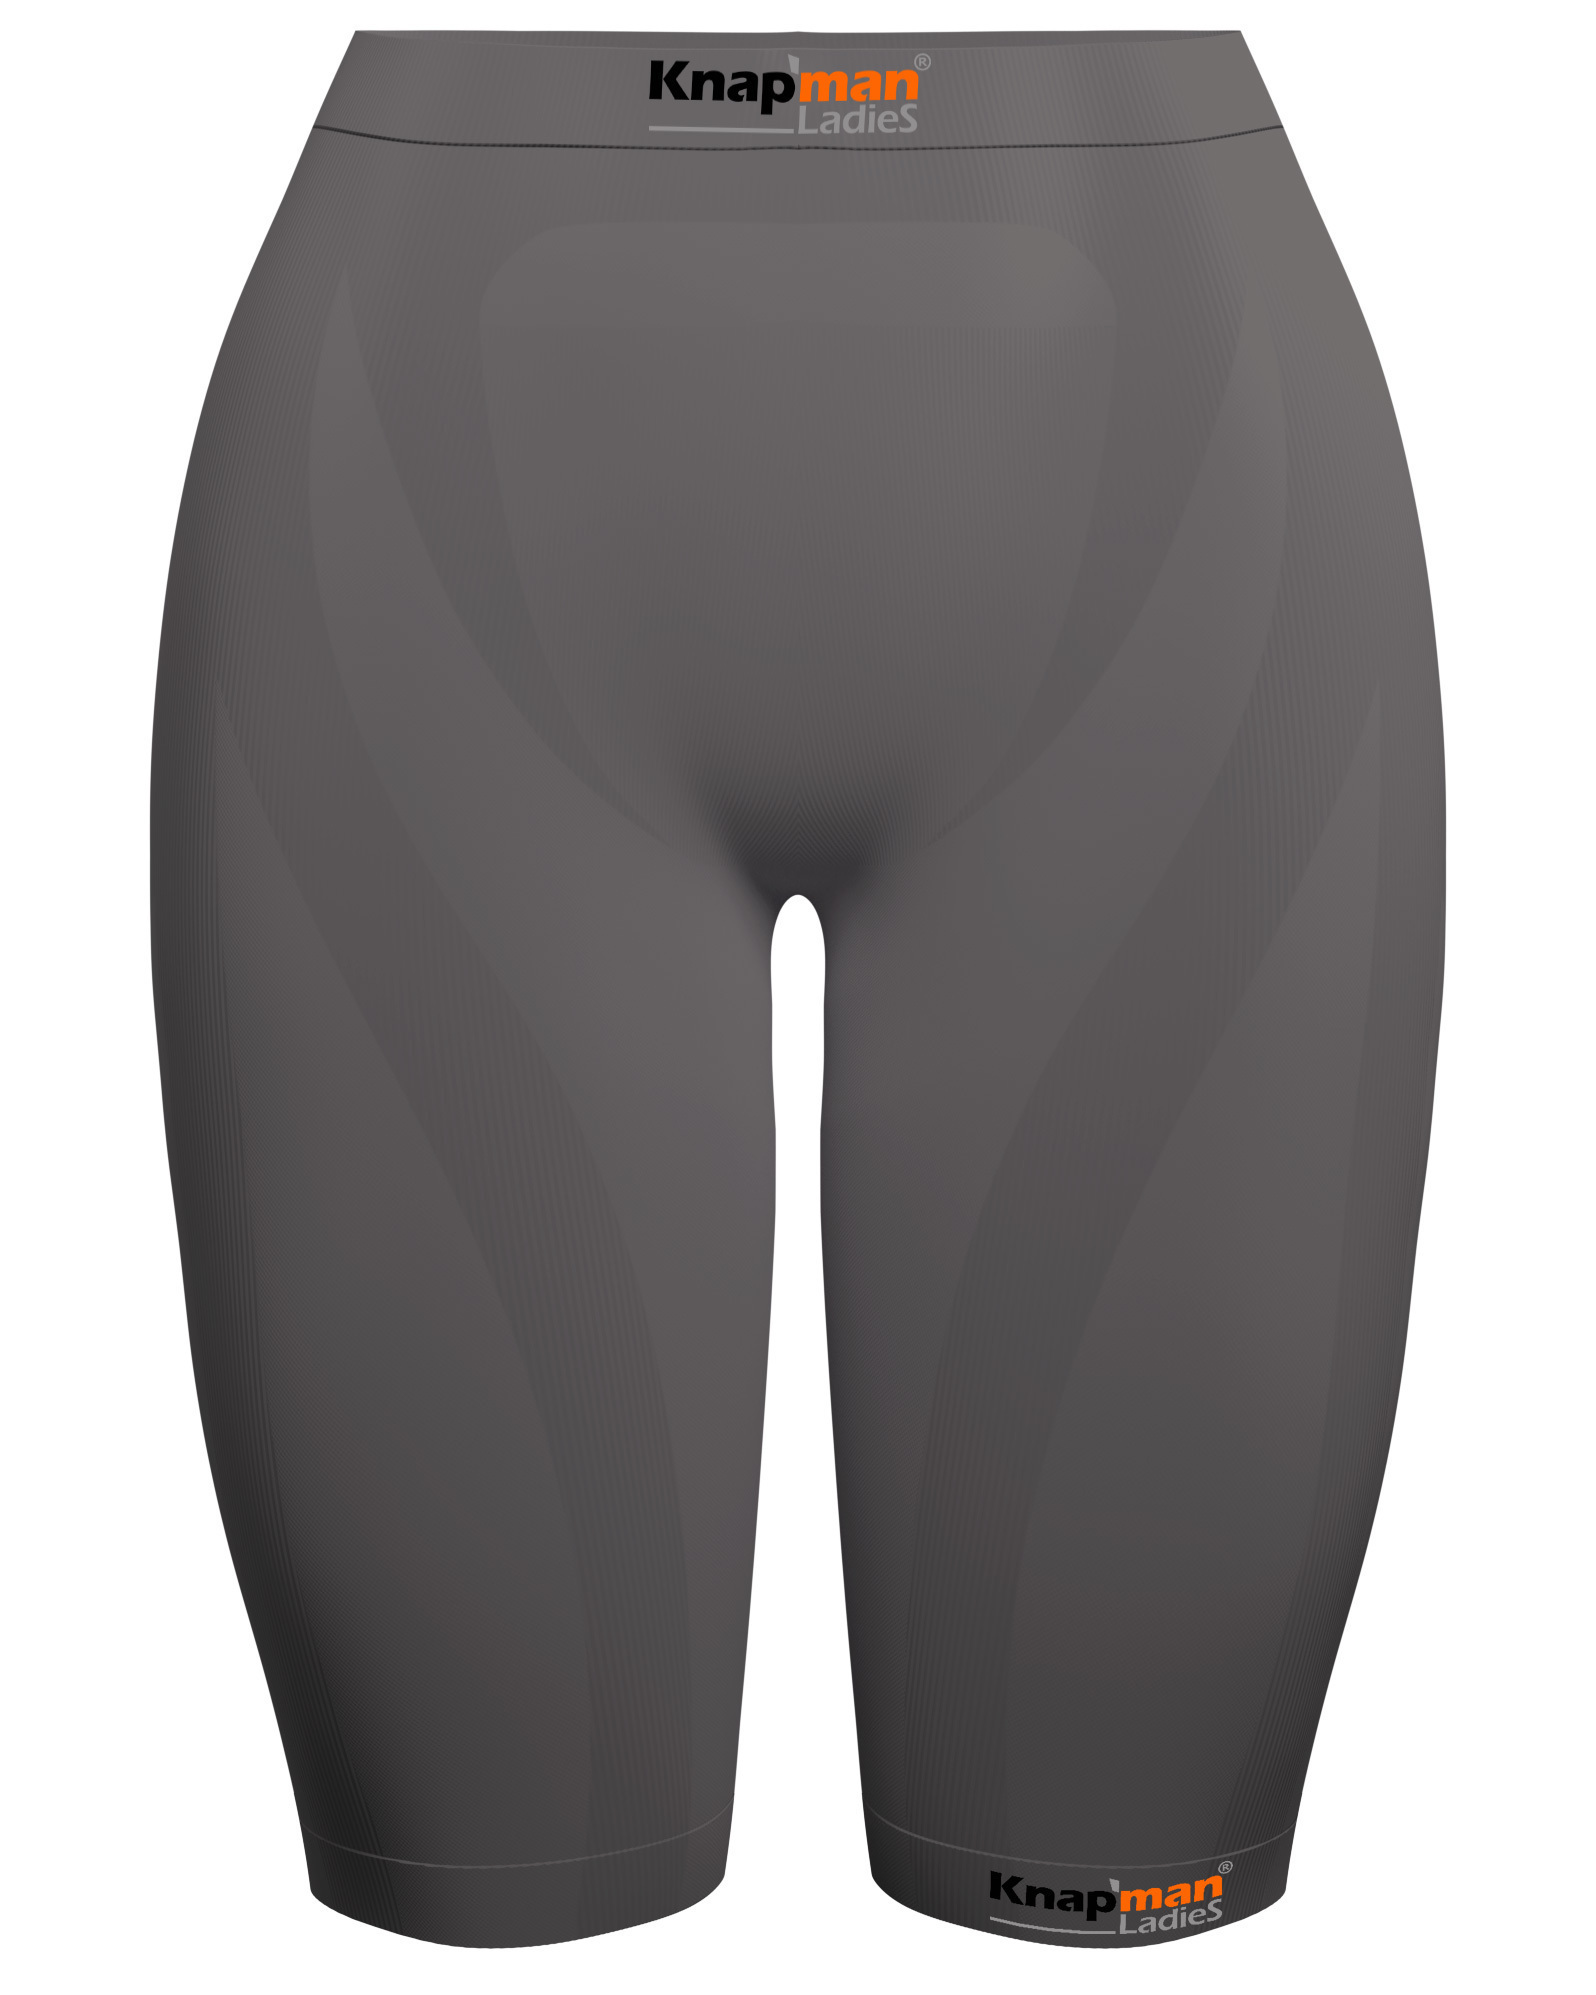 Knap'man Women's Compression Shorts Gray - 45%